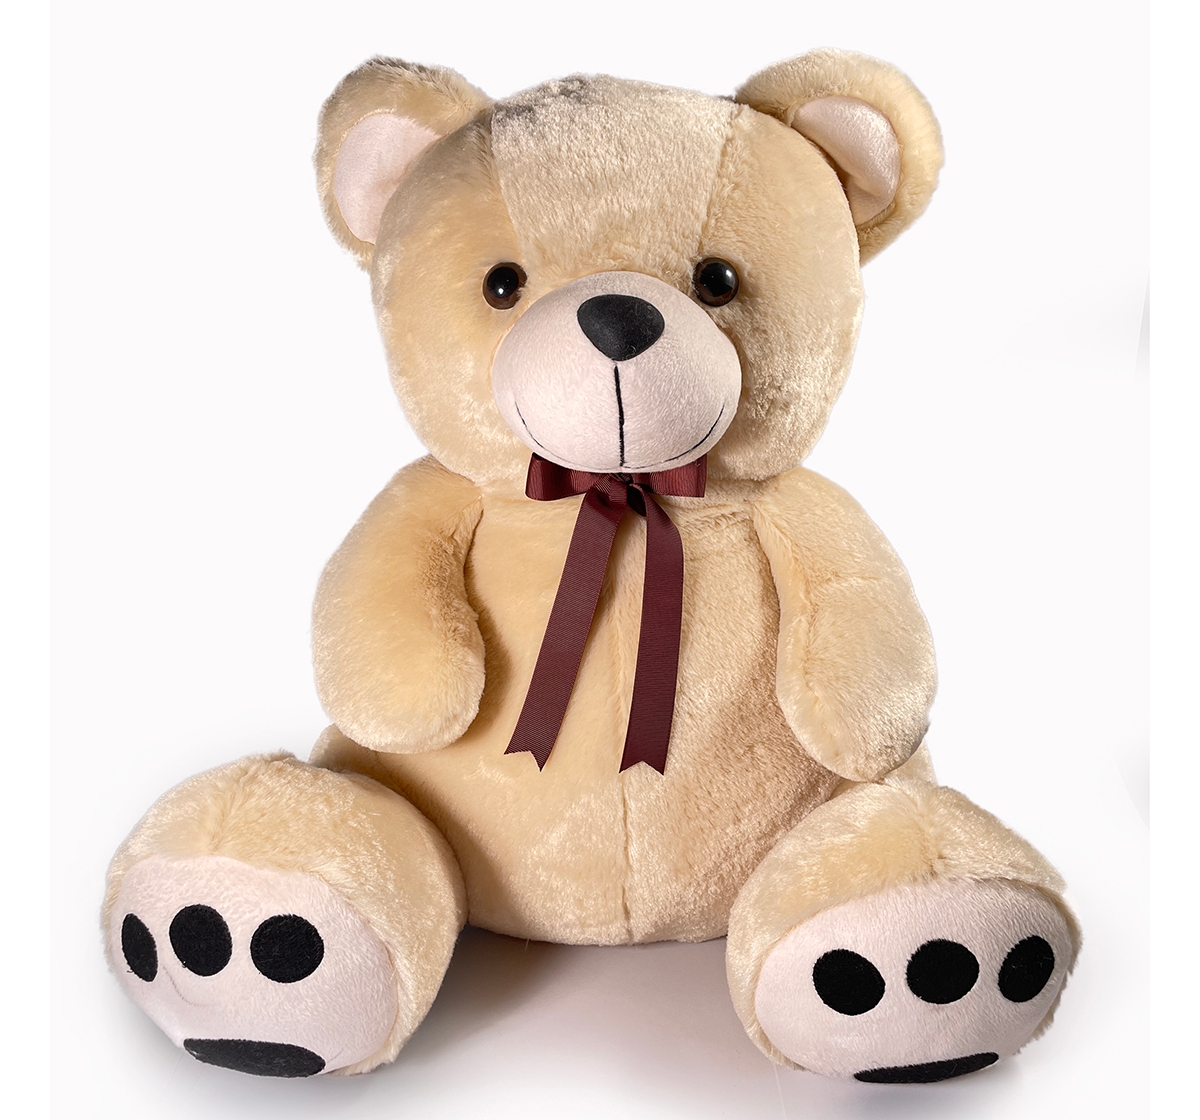 Mirada | Mirada 55cm jumbo teddy bear soft toy Multicolor 3Y+